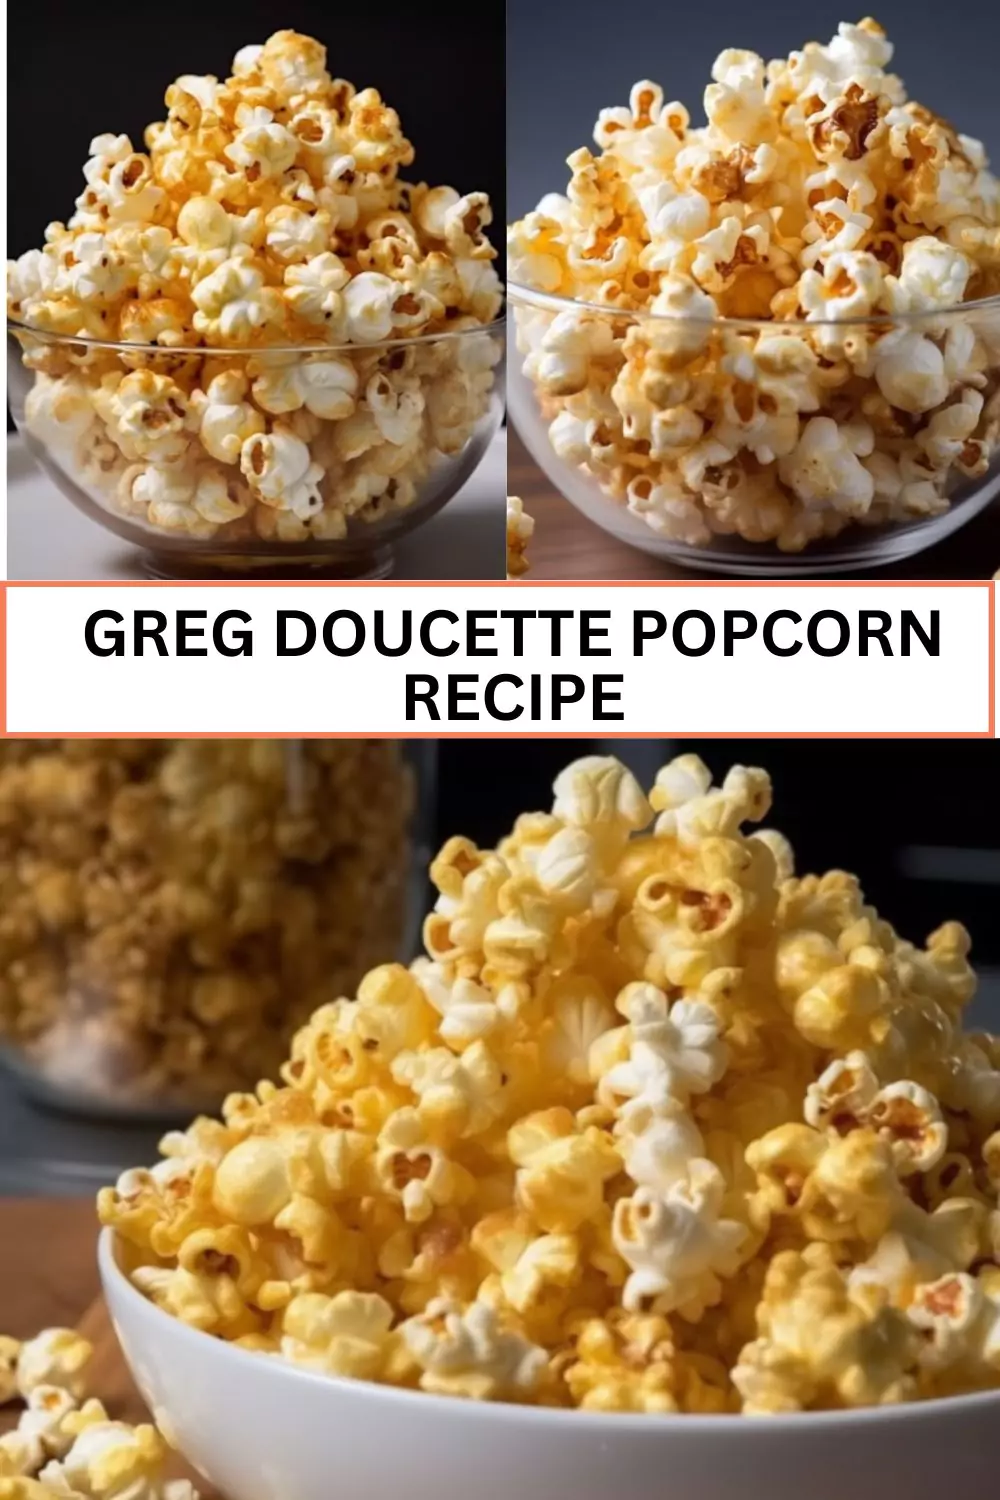 Best Greg Doucette Popcorn Recipe